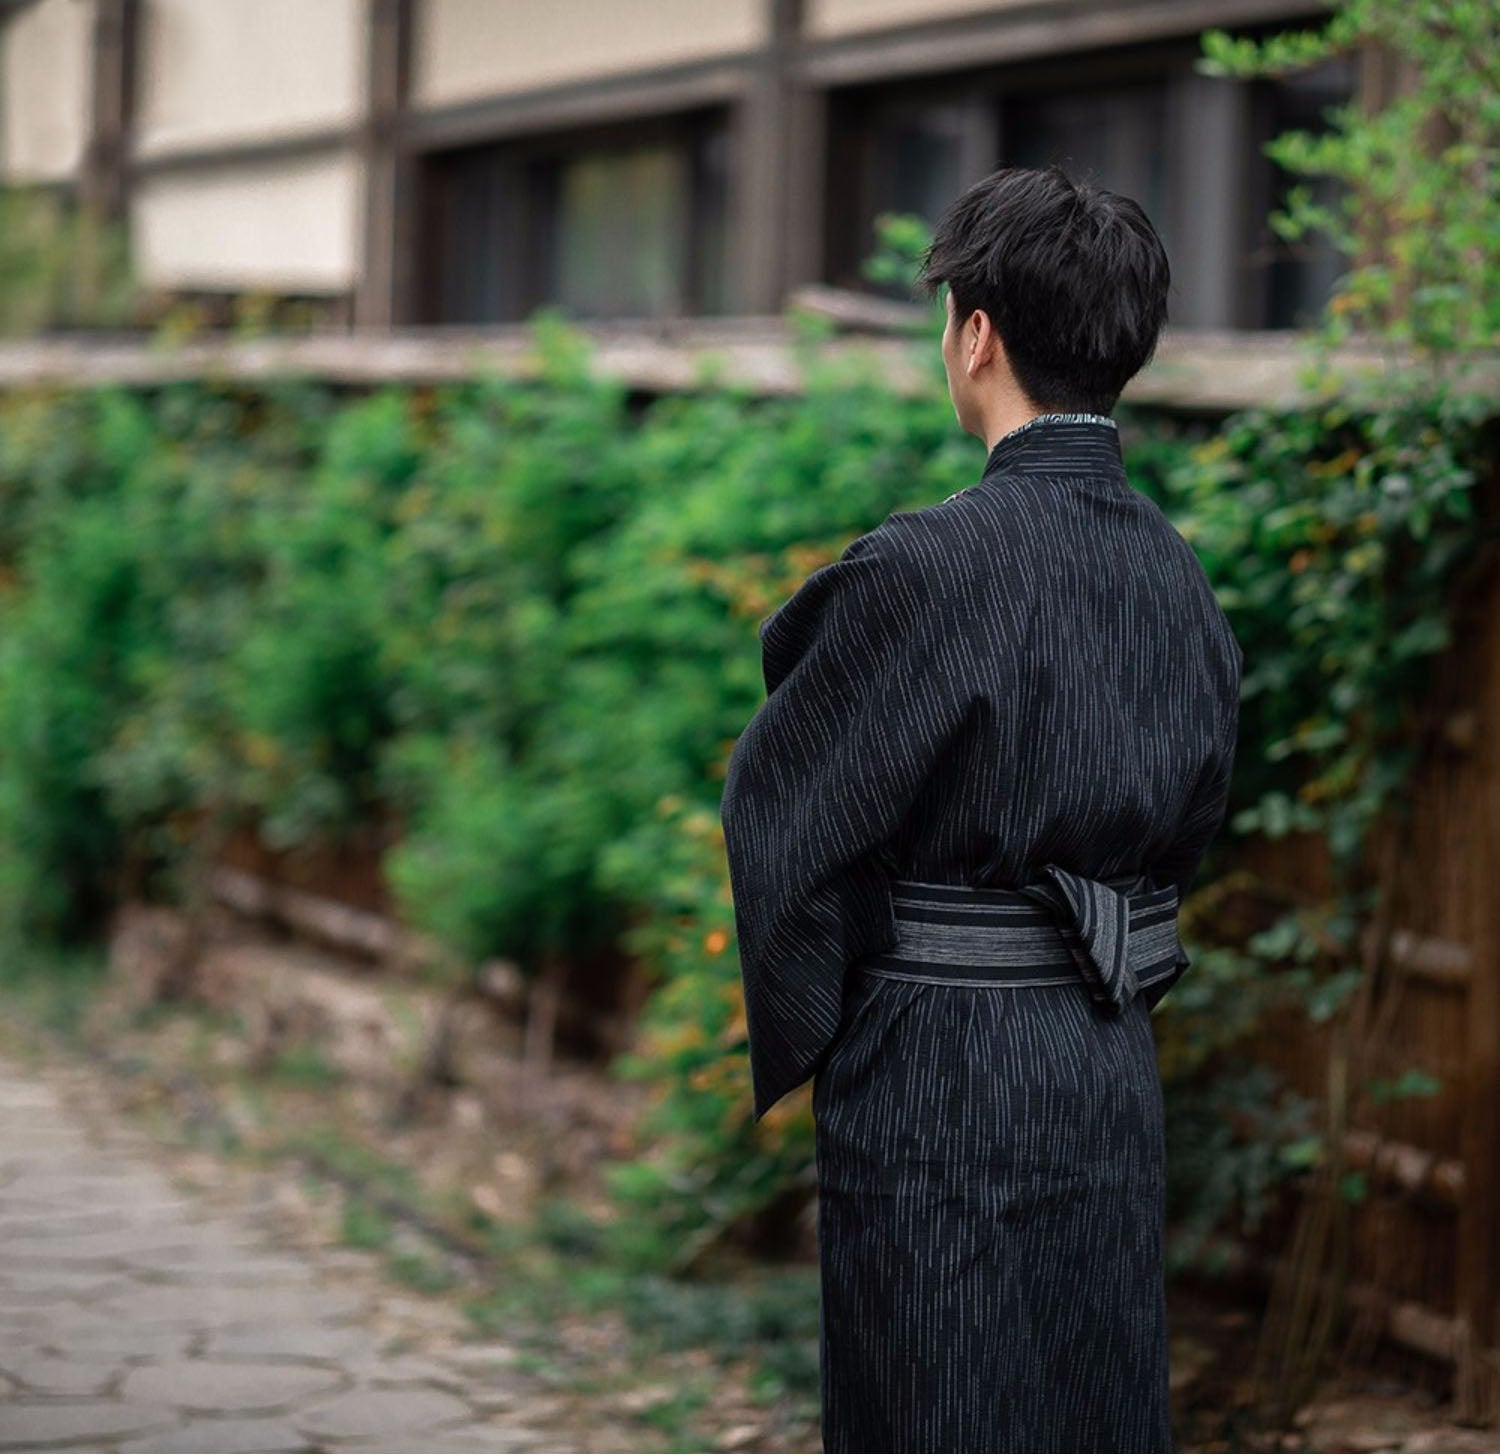 Japanese Yukata big wave design for men summer kimono cloth